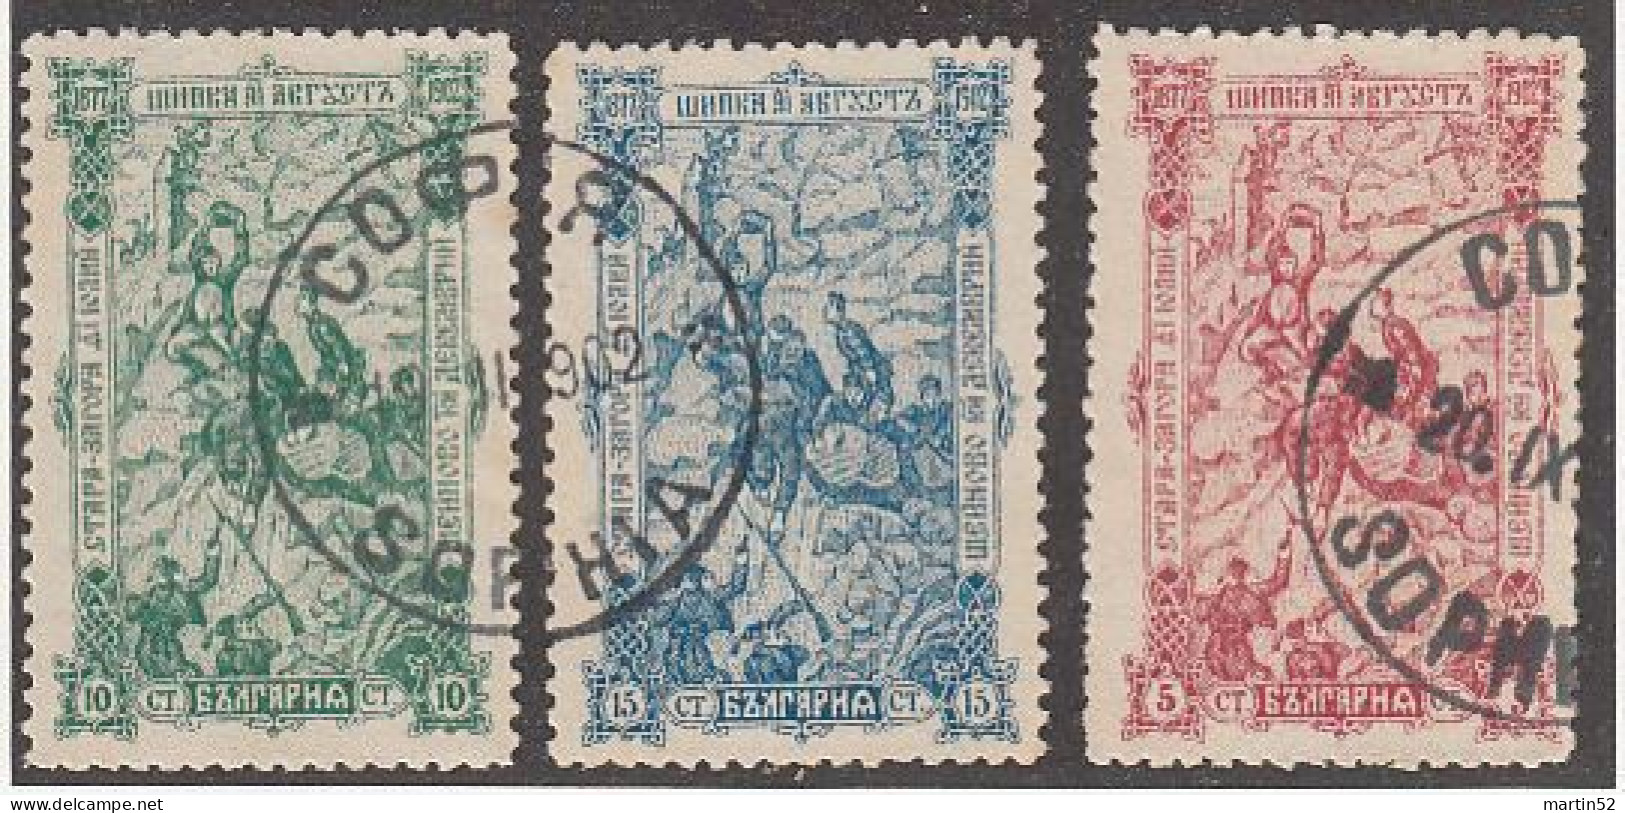 Bulgaria - Bulgarien - Bulgarie 1902: Schlacht Am Schipka-Pass Michel-N° 62-64 Mit Stempel SOPHIA 1902 - Used Stamps